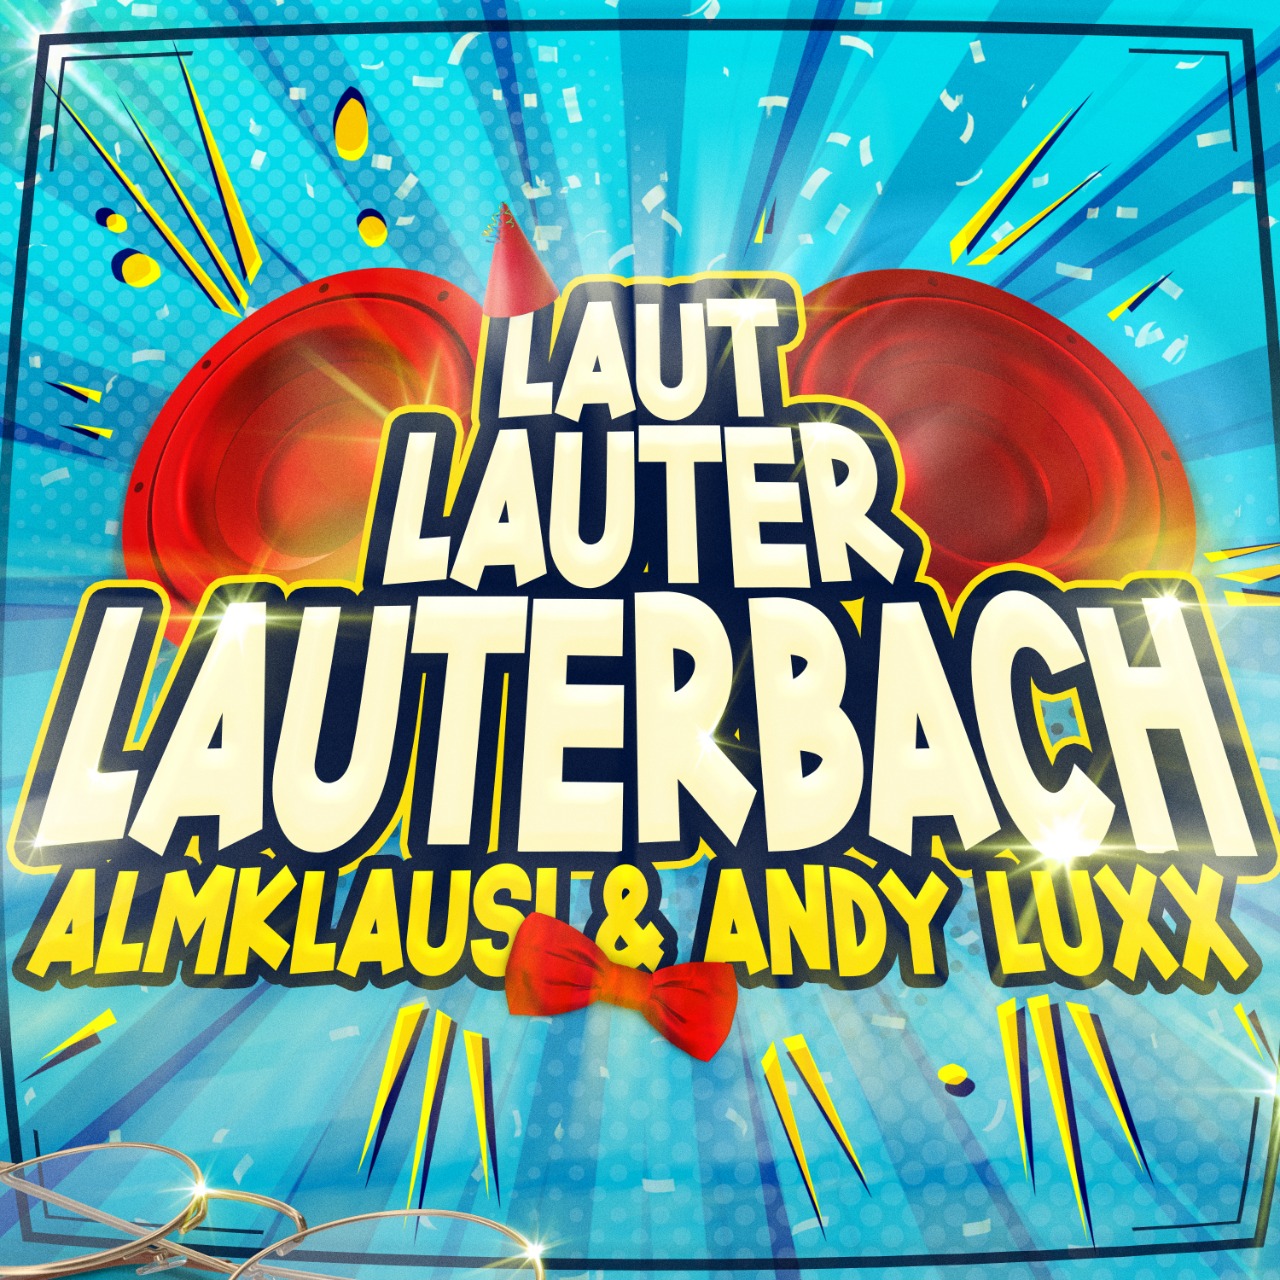 Cooler Hüttenkracher: Almklausi & Andy Luxx mit „Laut, Lauter Lauterbach“